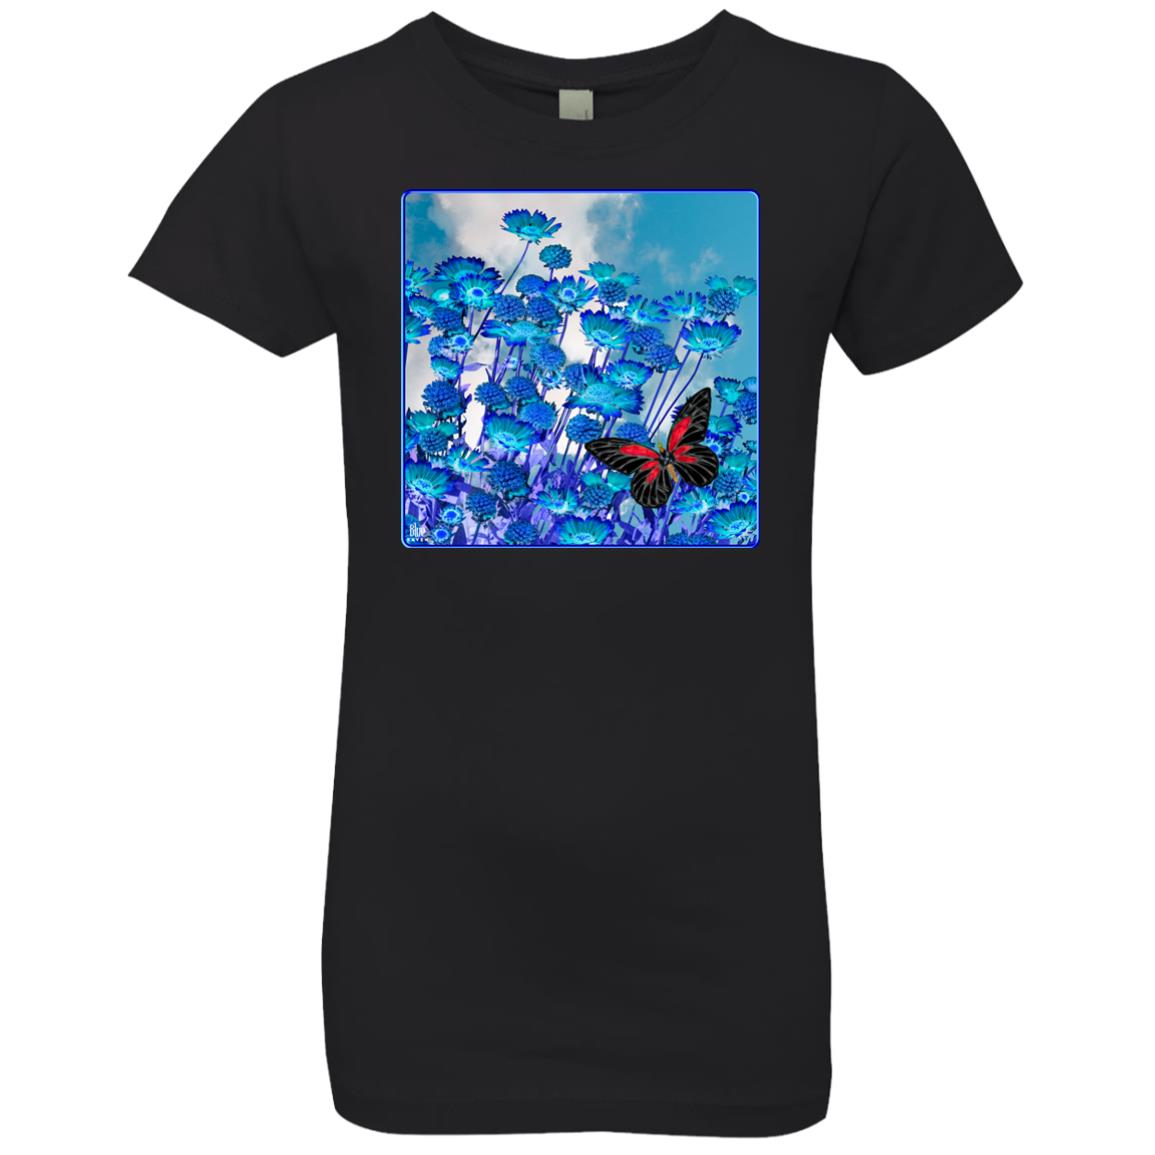 Blue Daisies - Girl's Premium Cotton T-Shirt